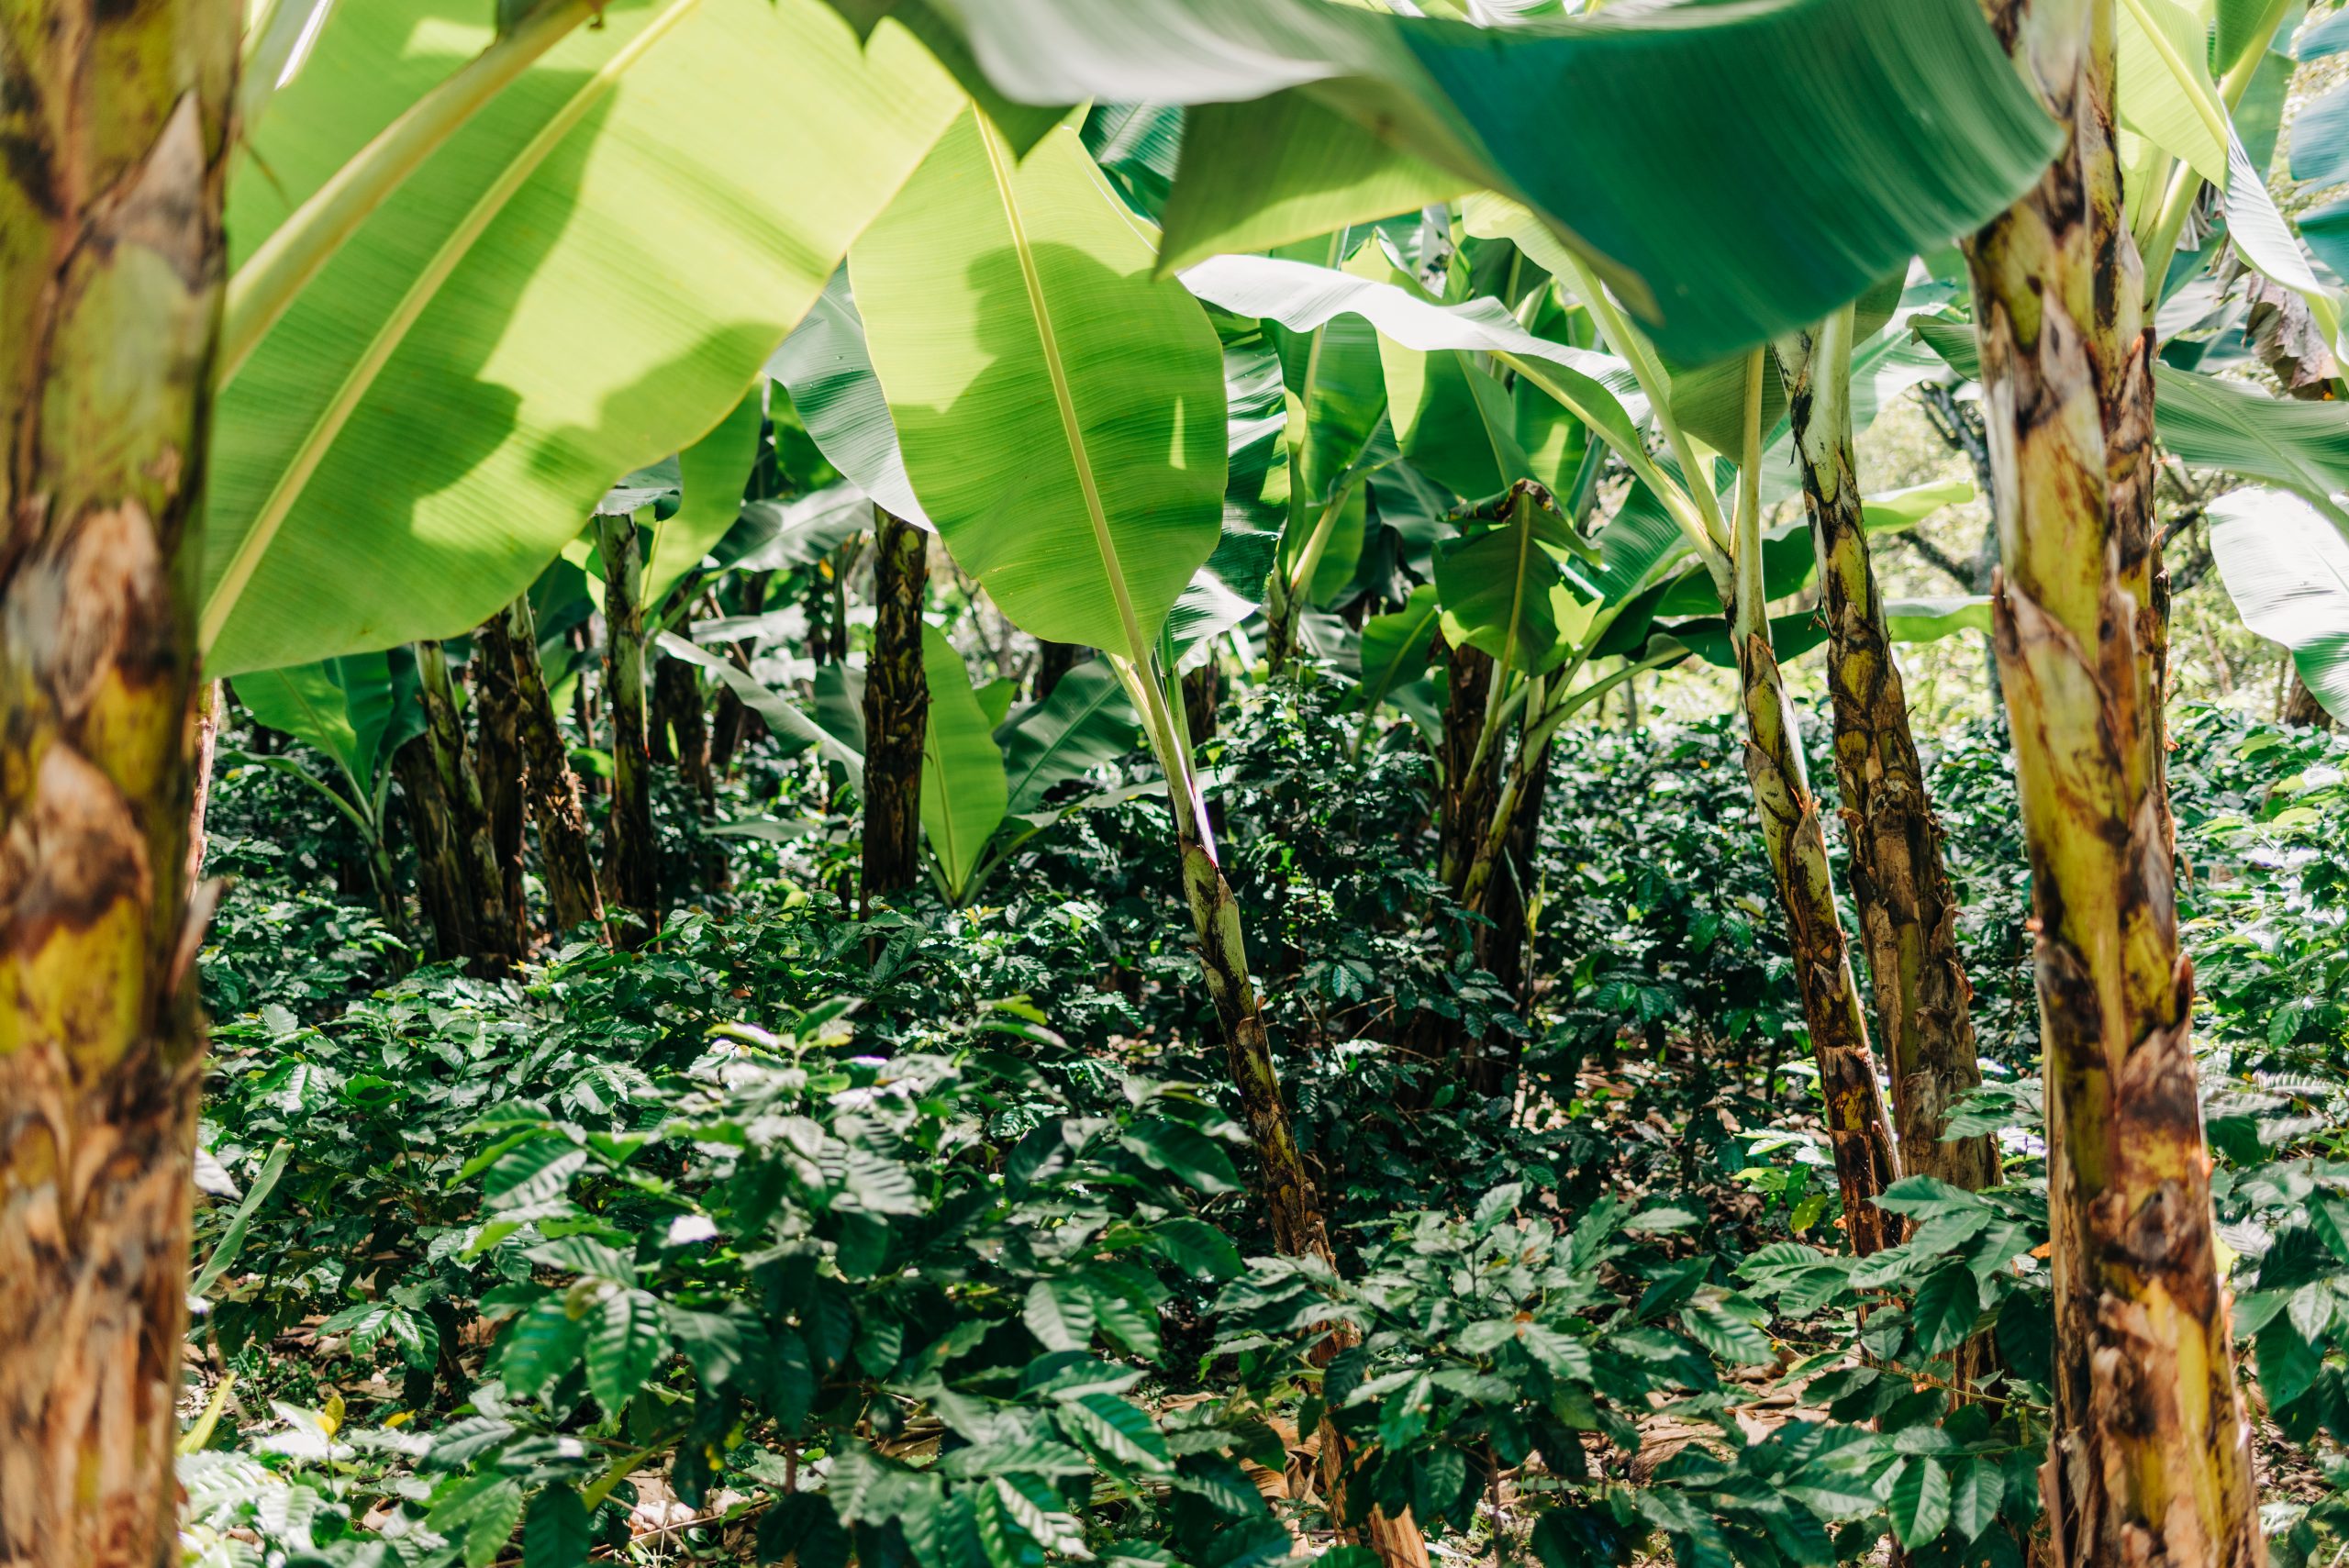 Coffee trees grow under the shade of banana trees in Honduras.